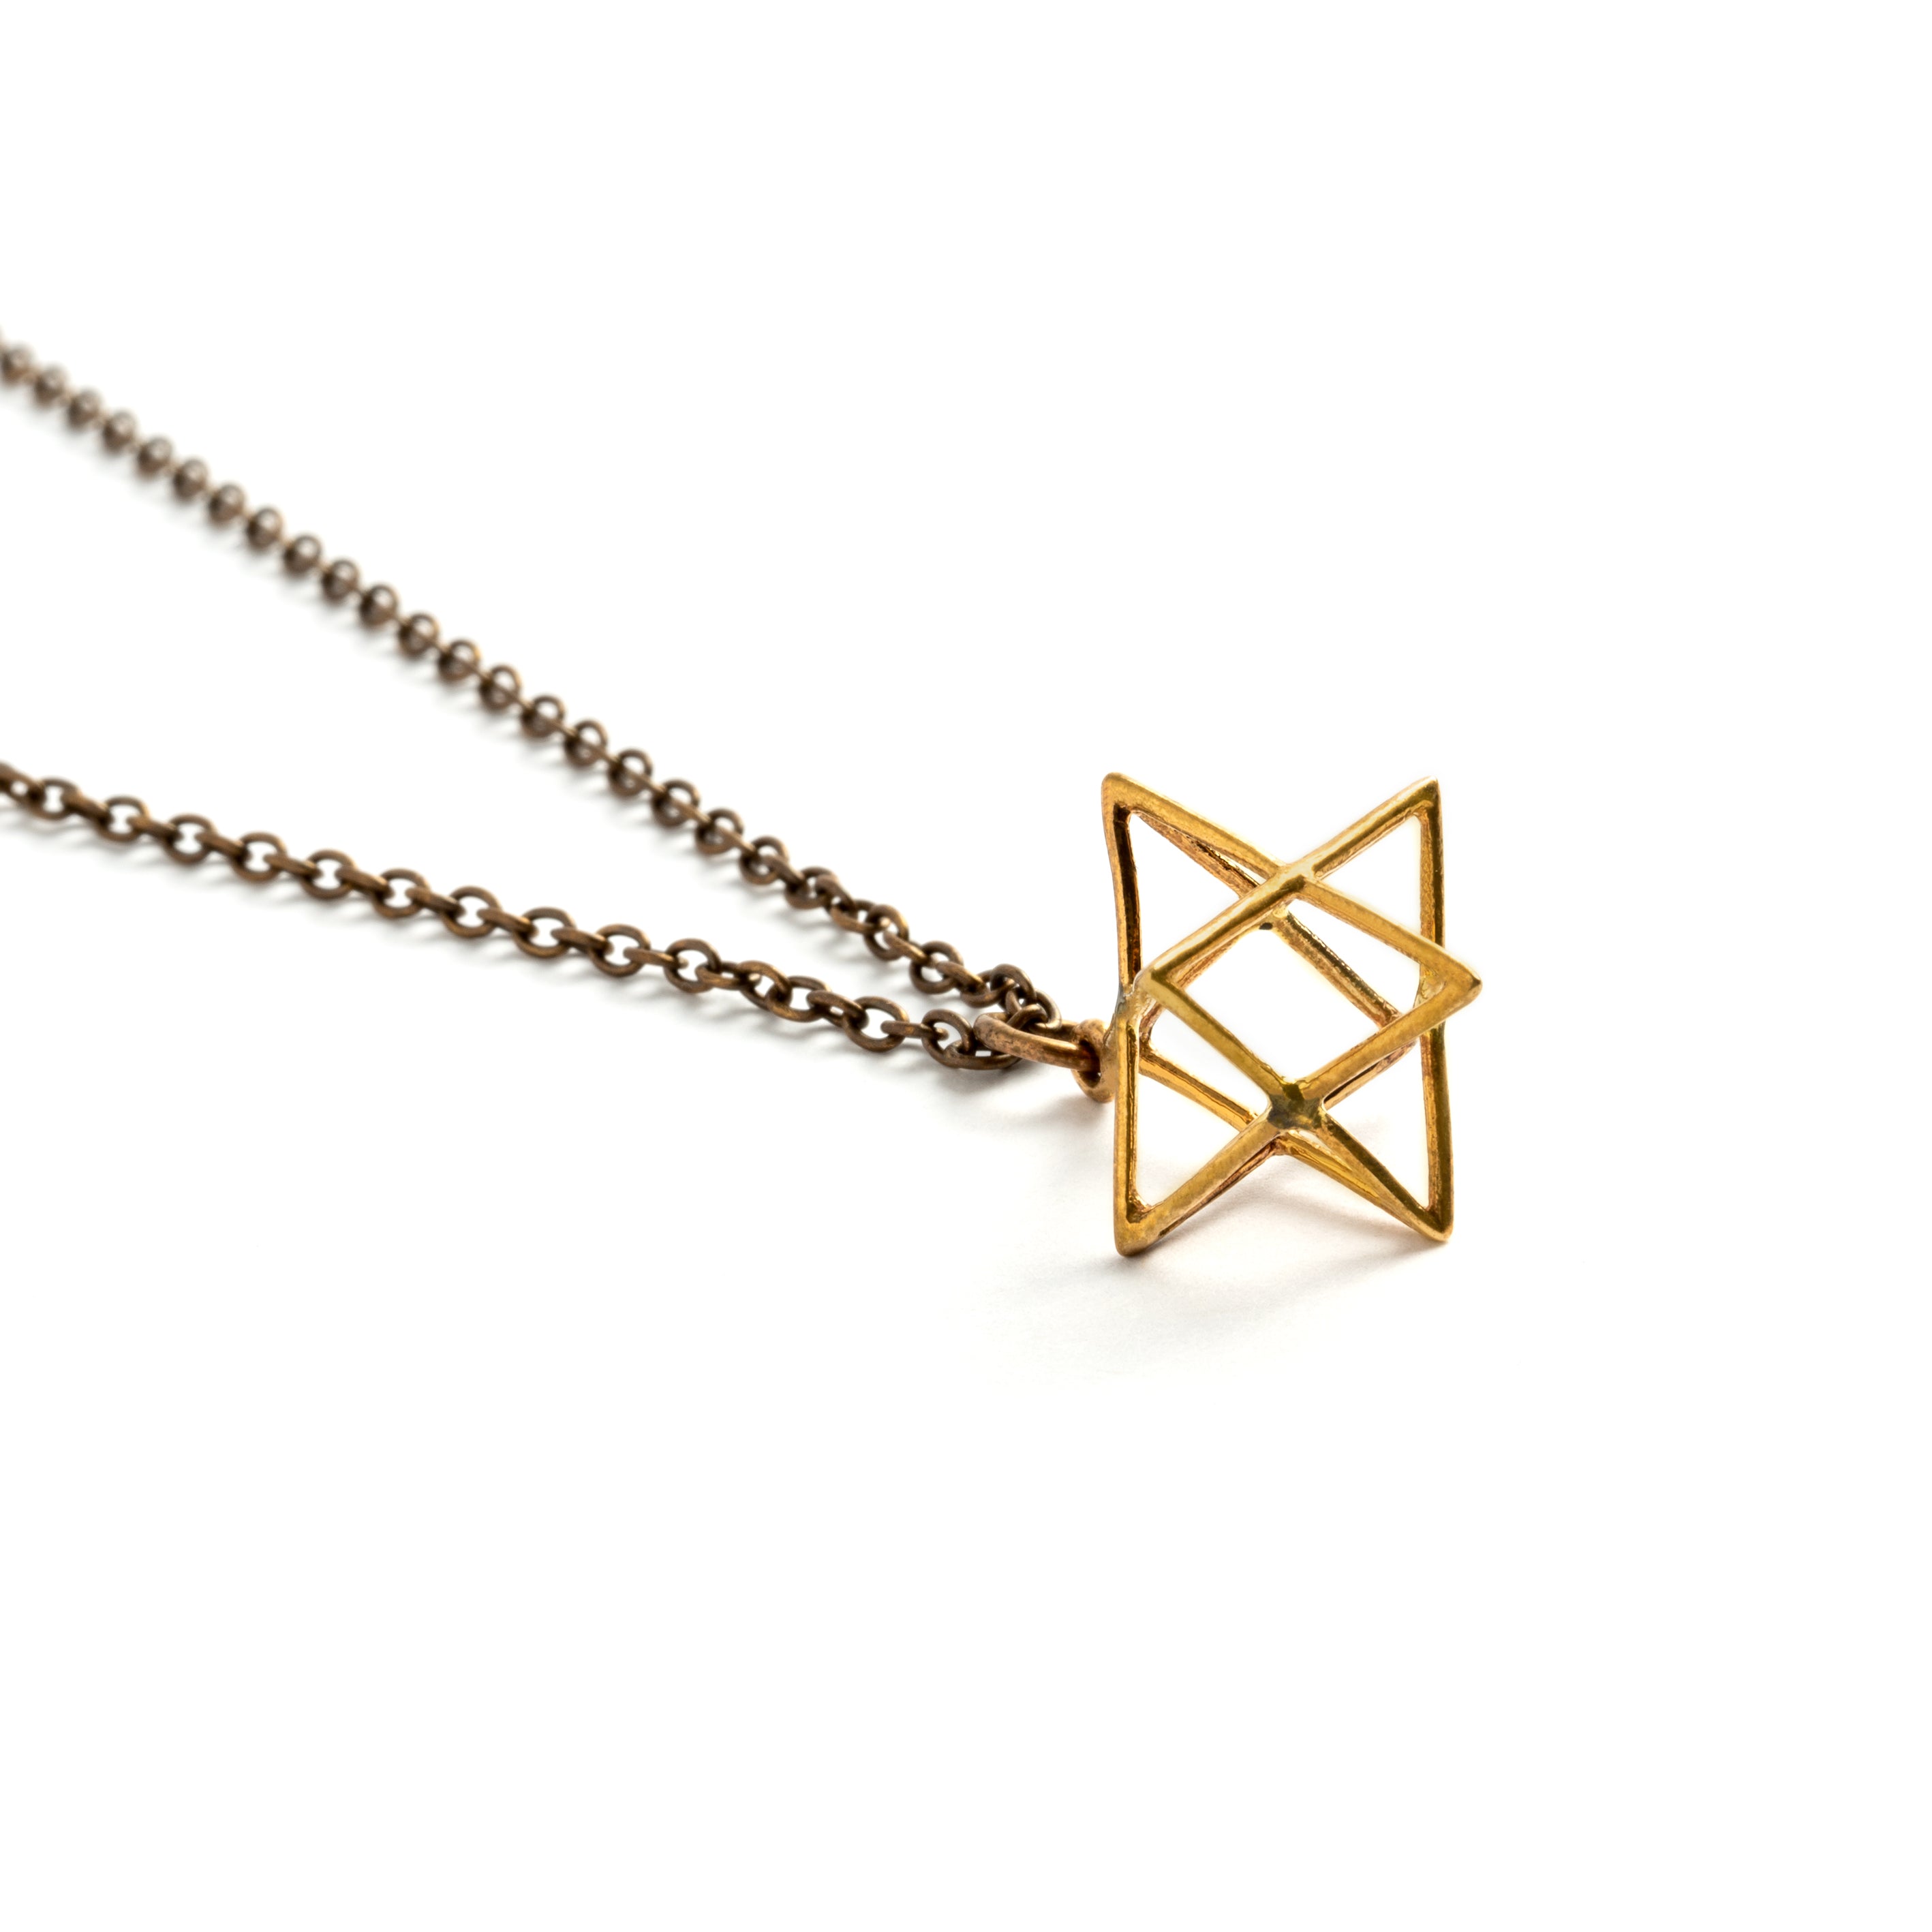 Bronze Wire Merkaba charm pendant necklace left side view